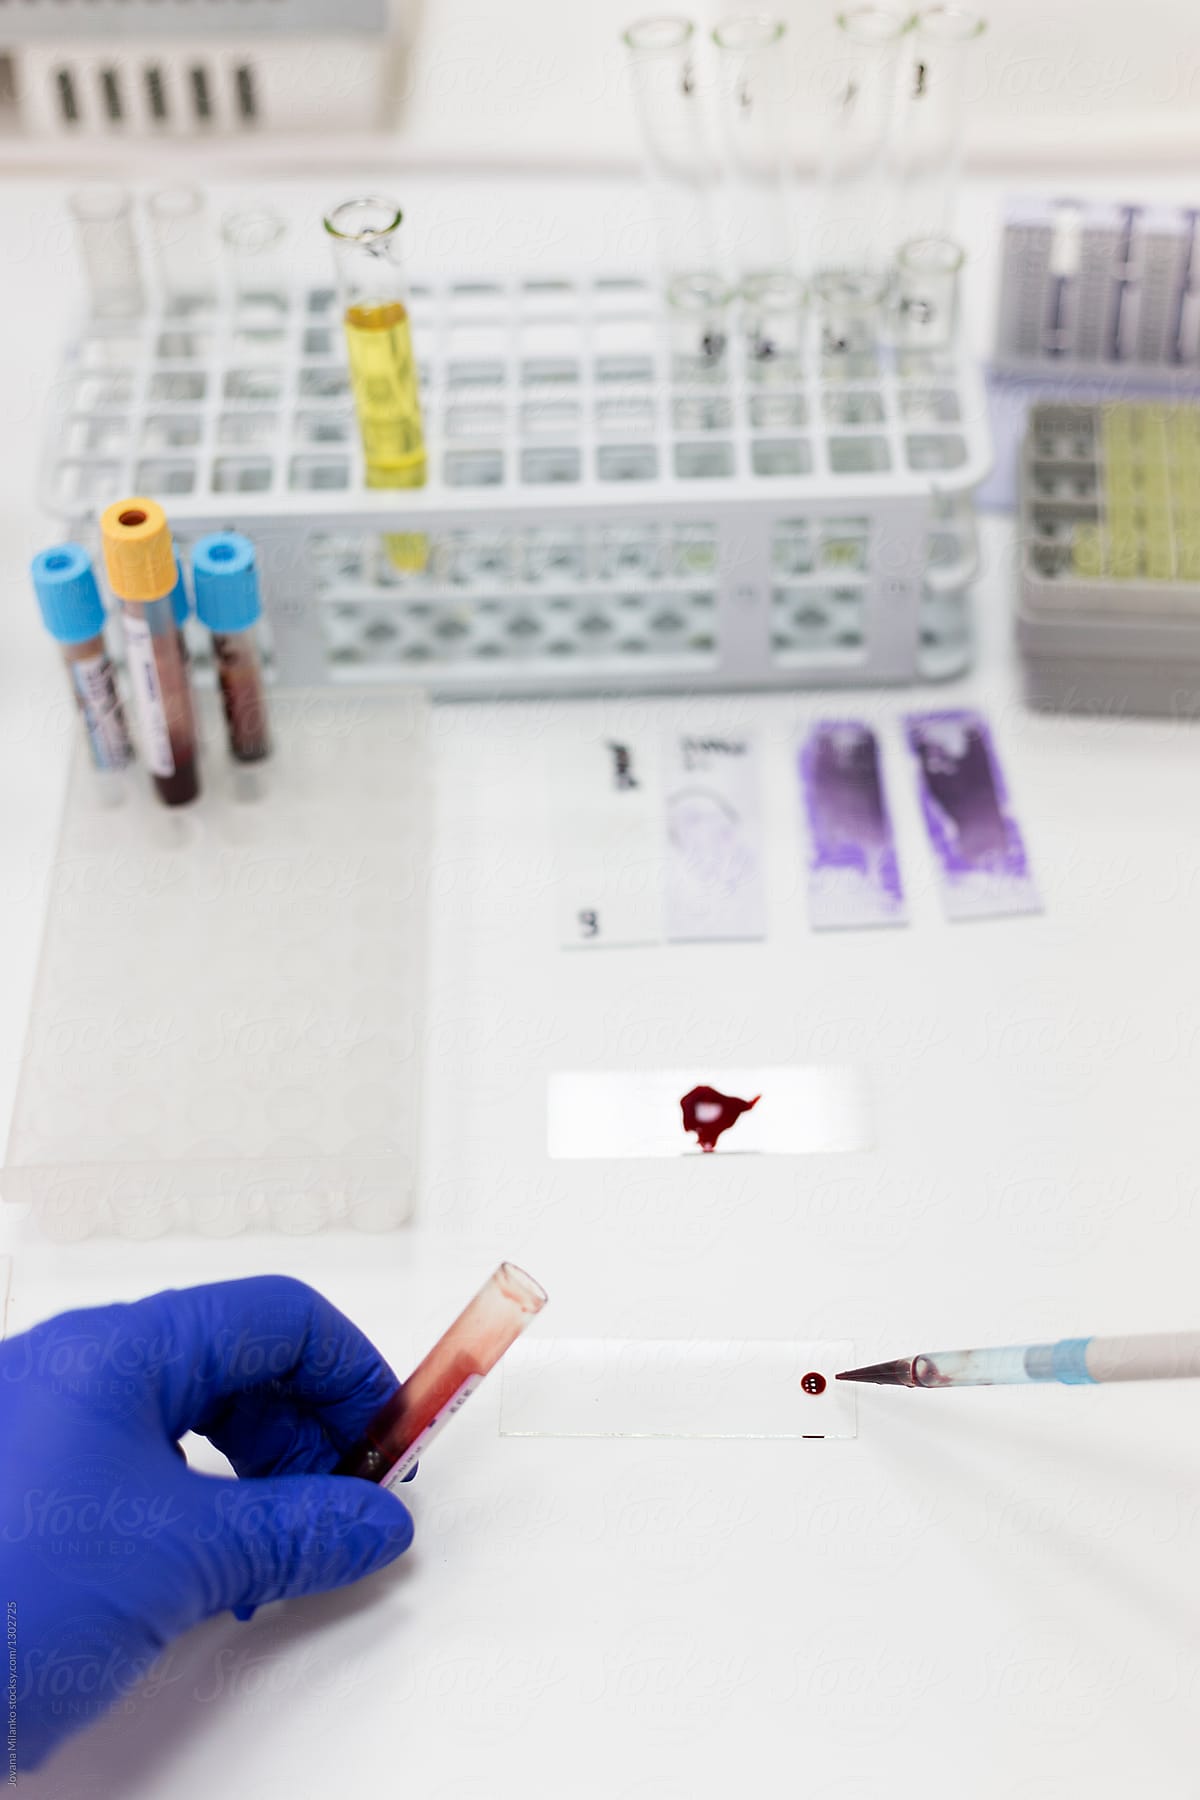 Blood Sample Testing in Laboratory